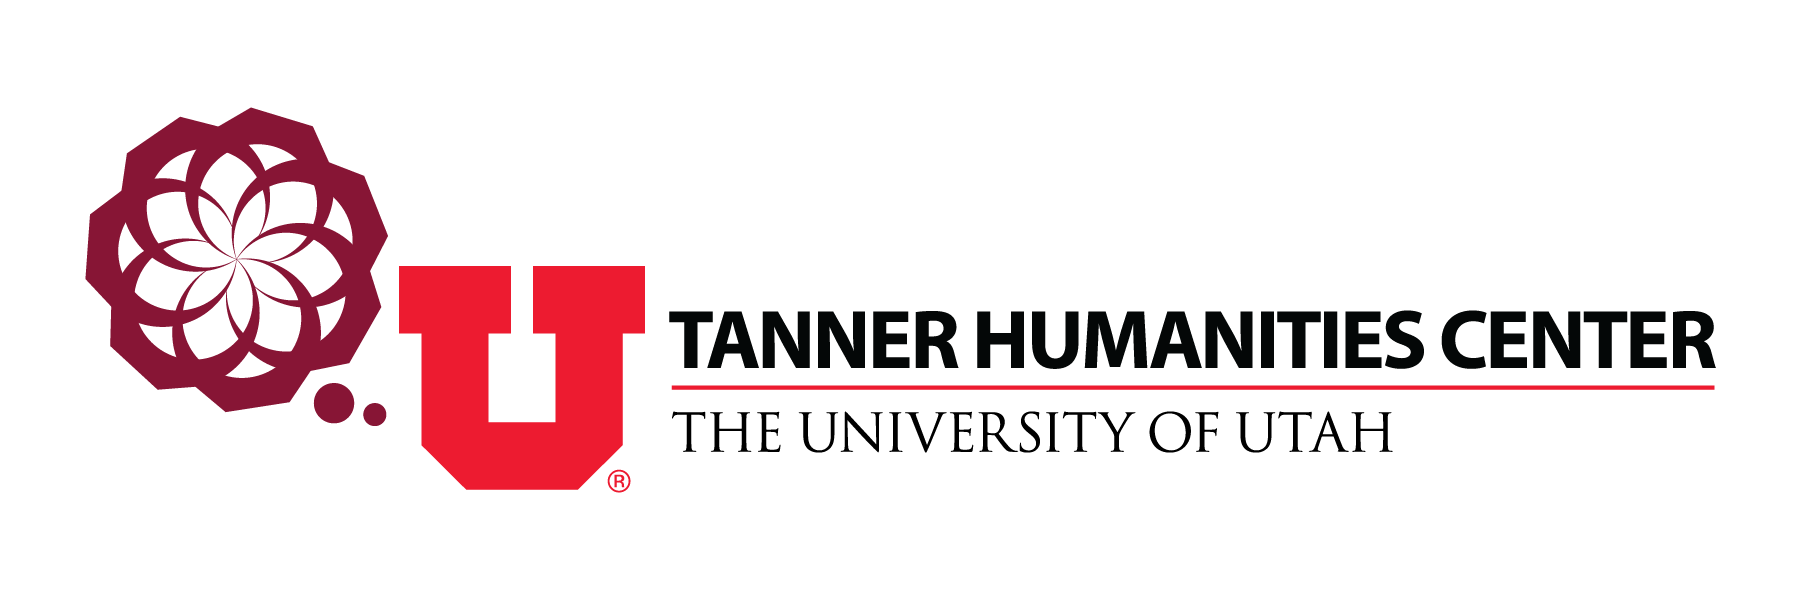 Tanner Humanities Center horizonital Logo